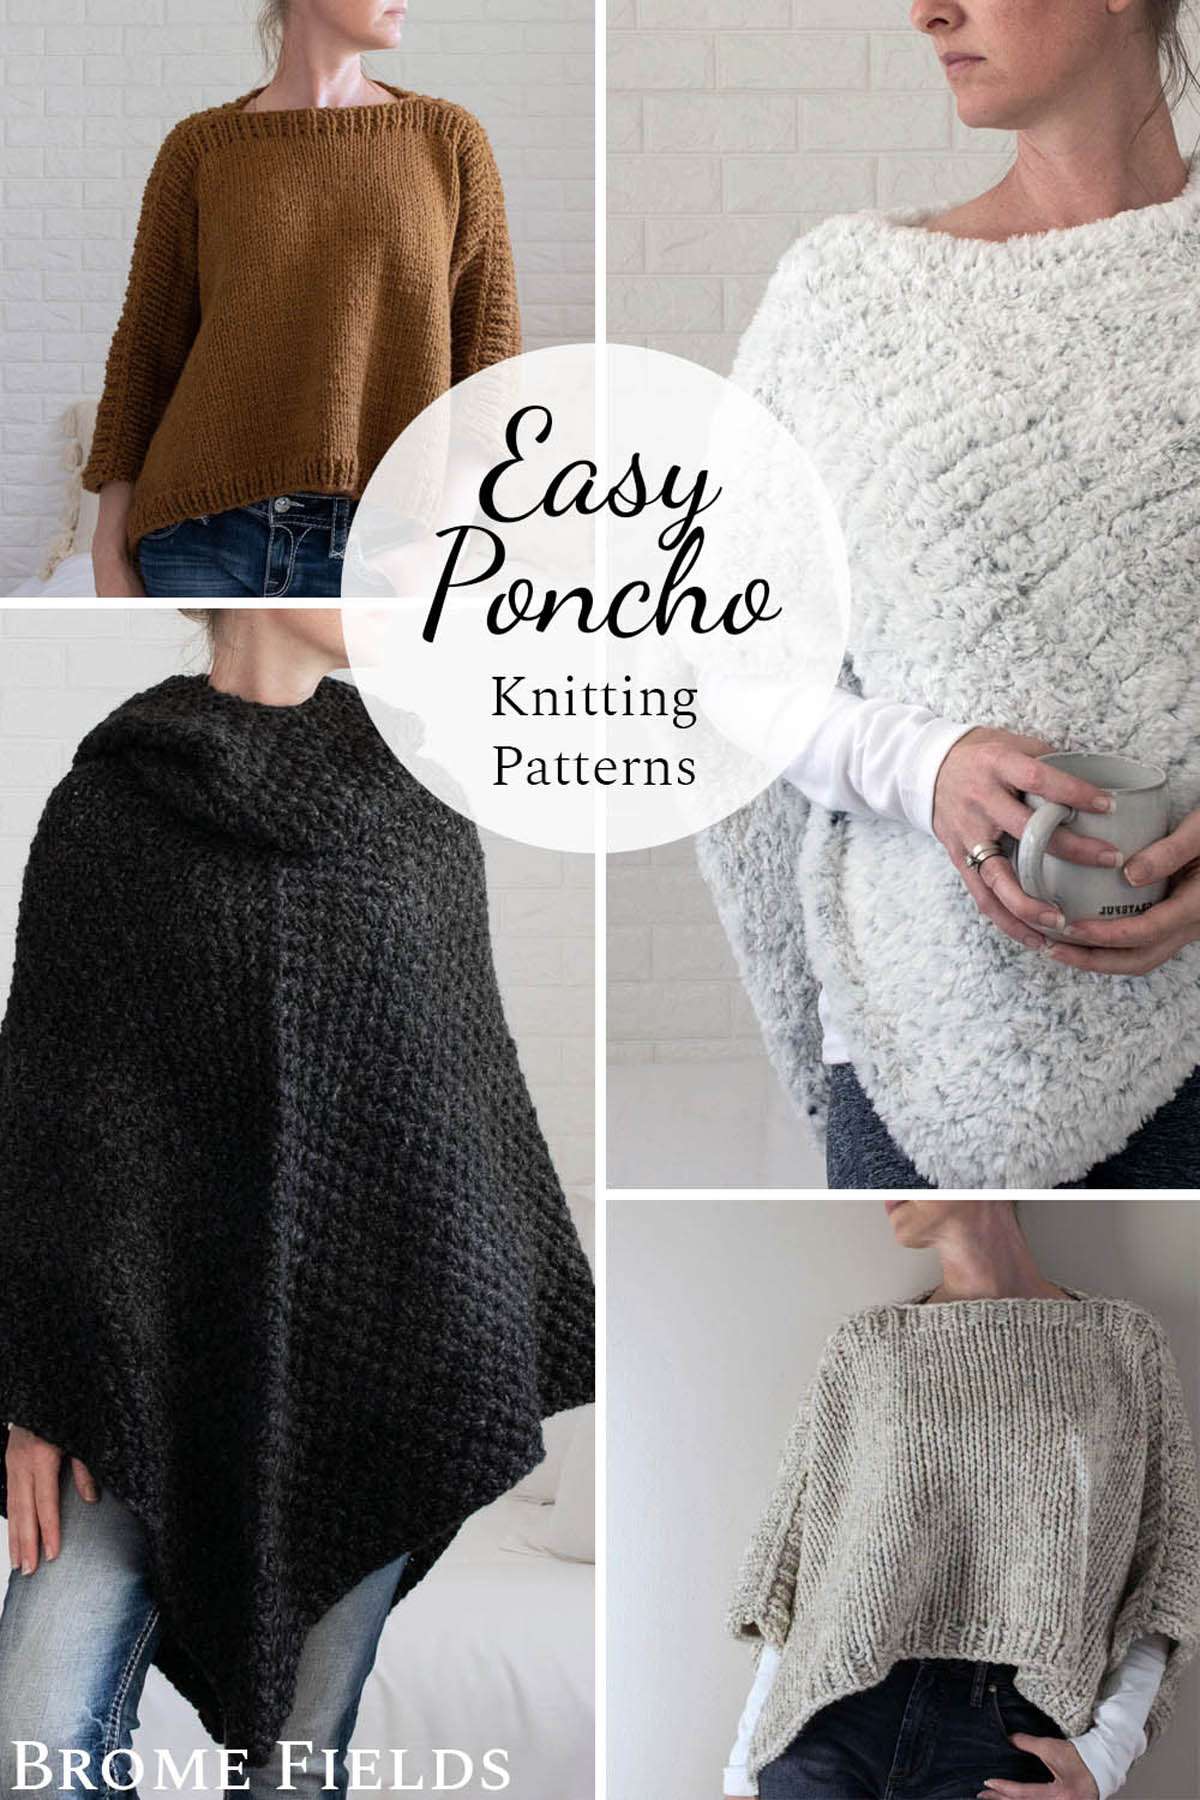 Cable poncho knitting pattern: Knitting pattern